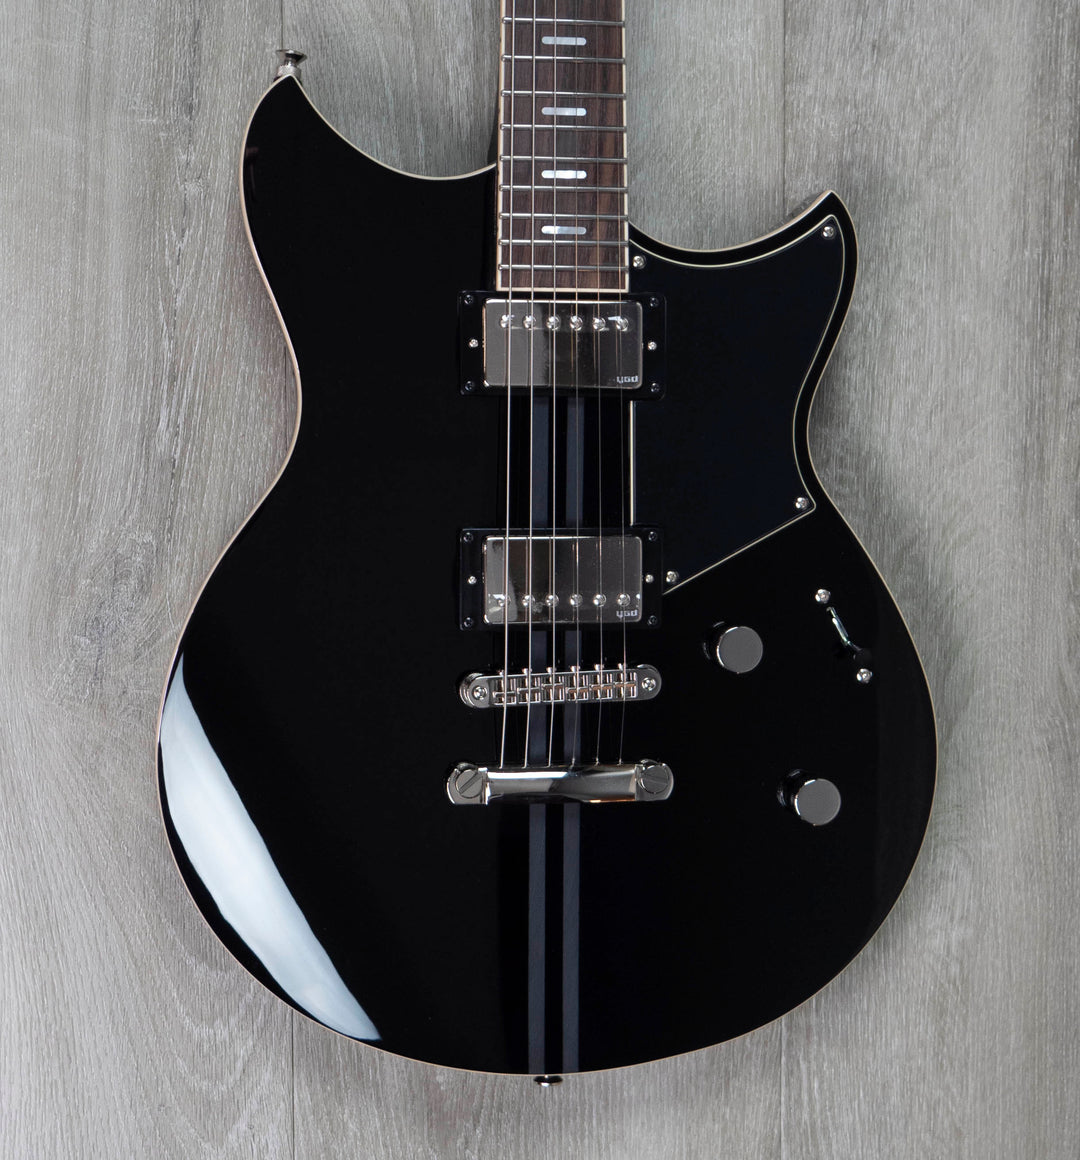 Yamaha RSS20 Revstar Standard Electric Guitar, Black